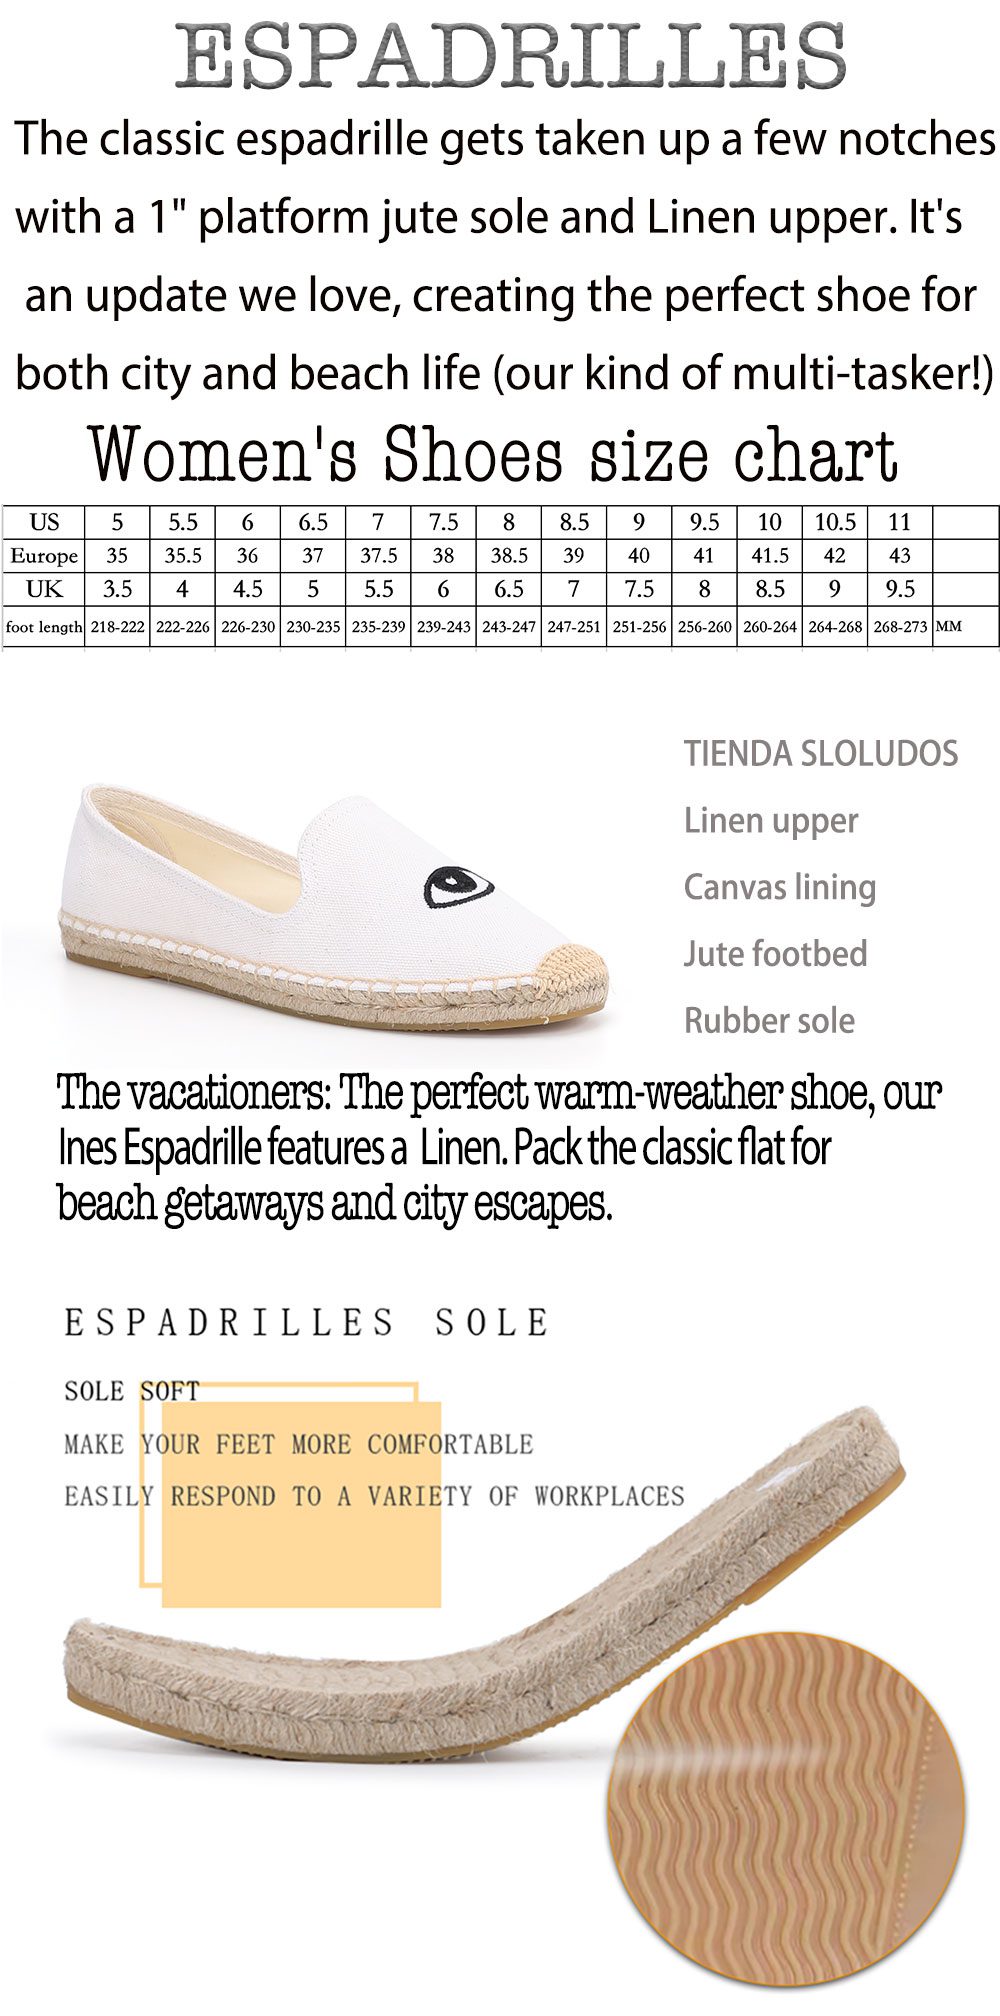 Espadrilles For Flat 2022 Promotion Ballet Flats Limited Hemp Cotton Fabric Sapatos Zapatillas Mujer Casual Tienda Soludos